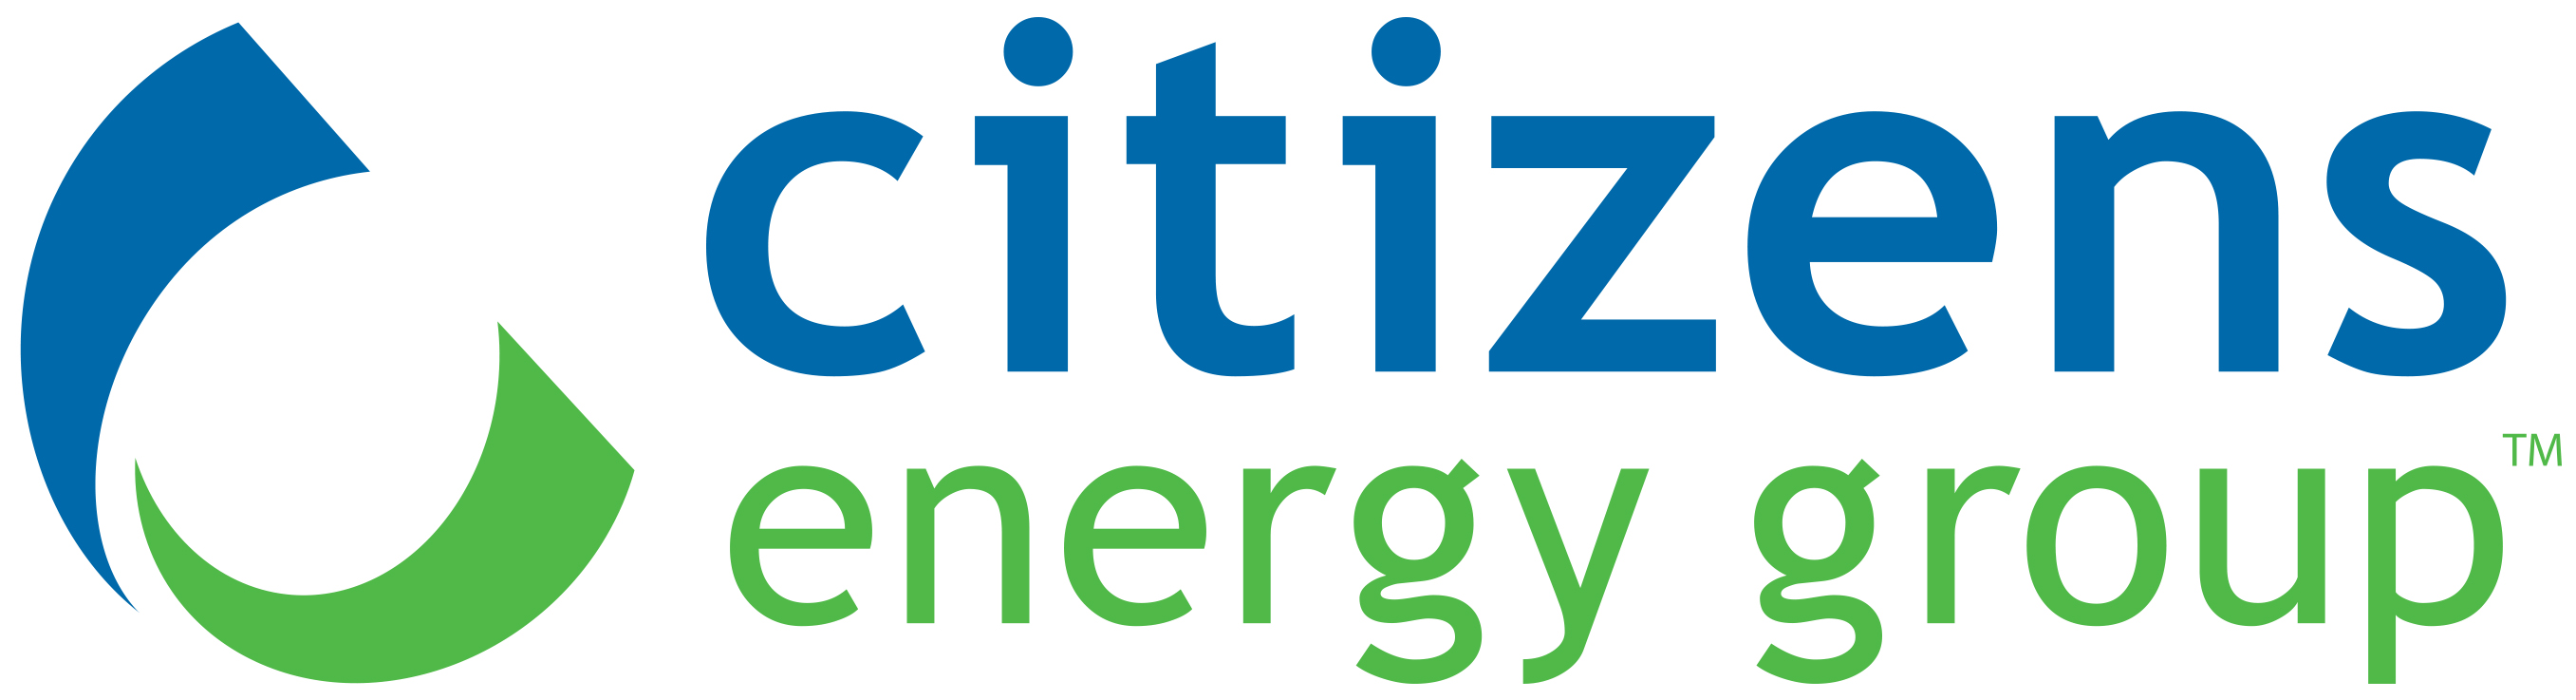 P. Citizens Energy Group (Mission)